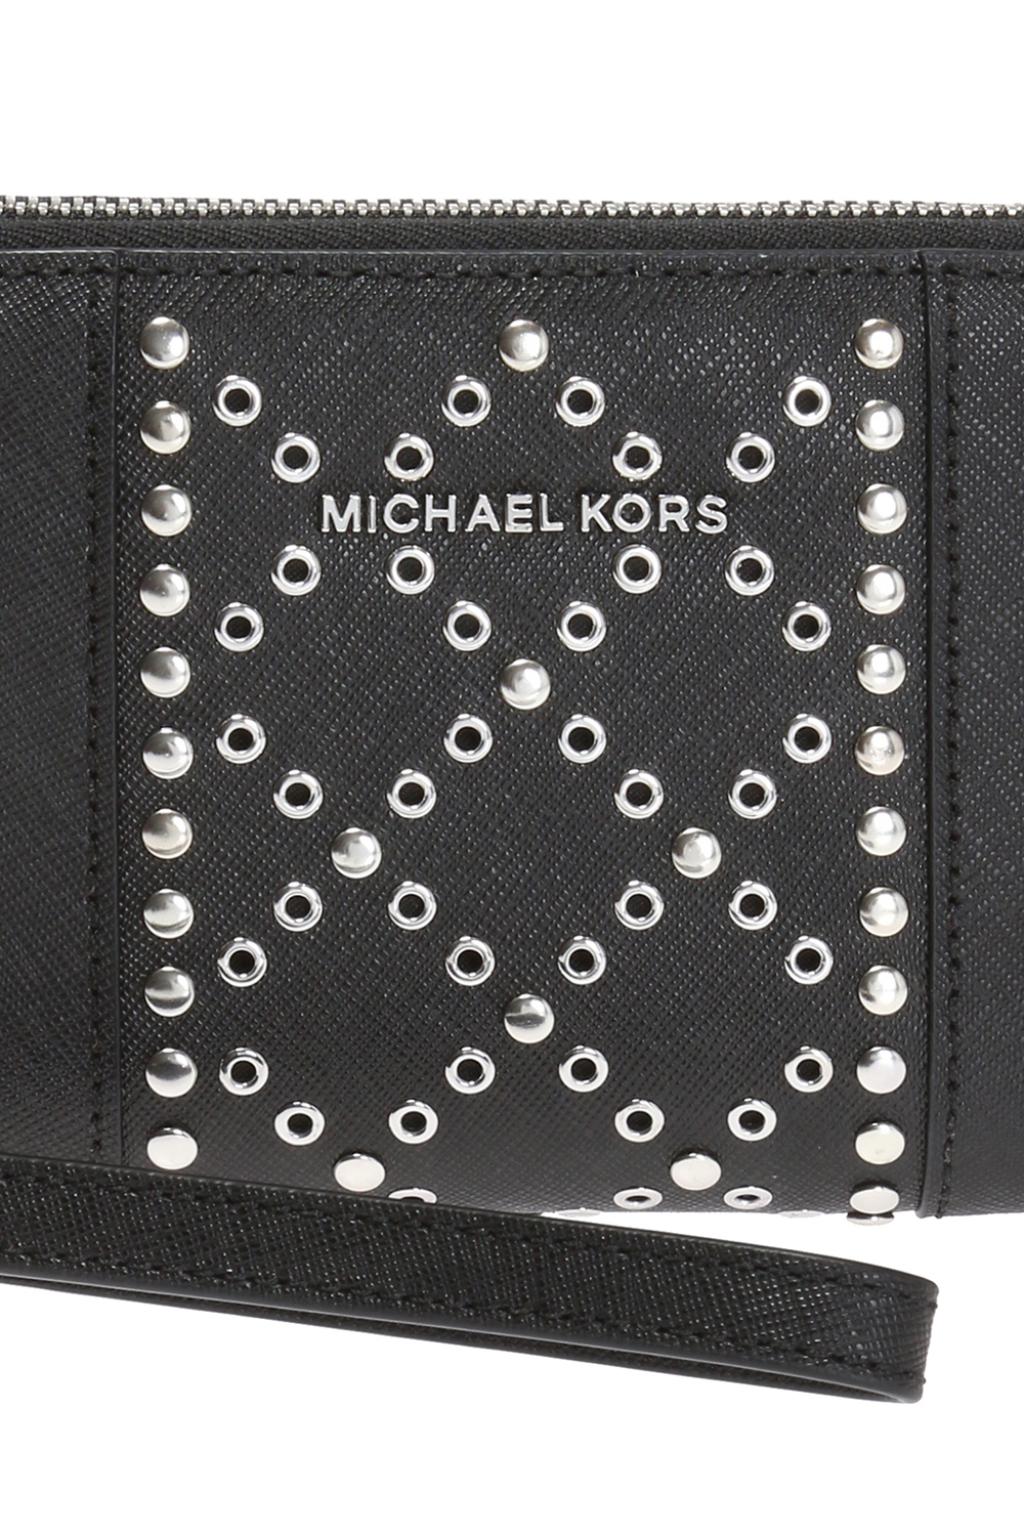 black studded michael kors wallet